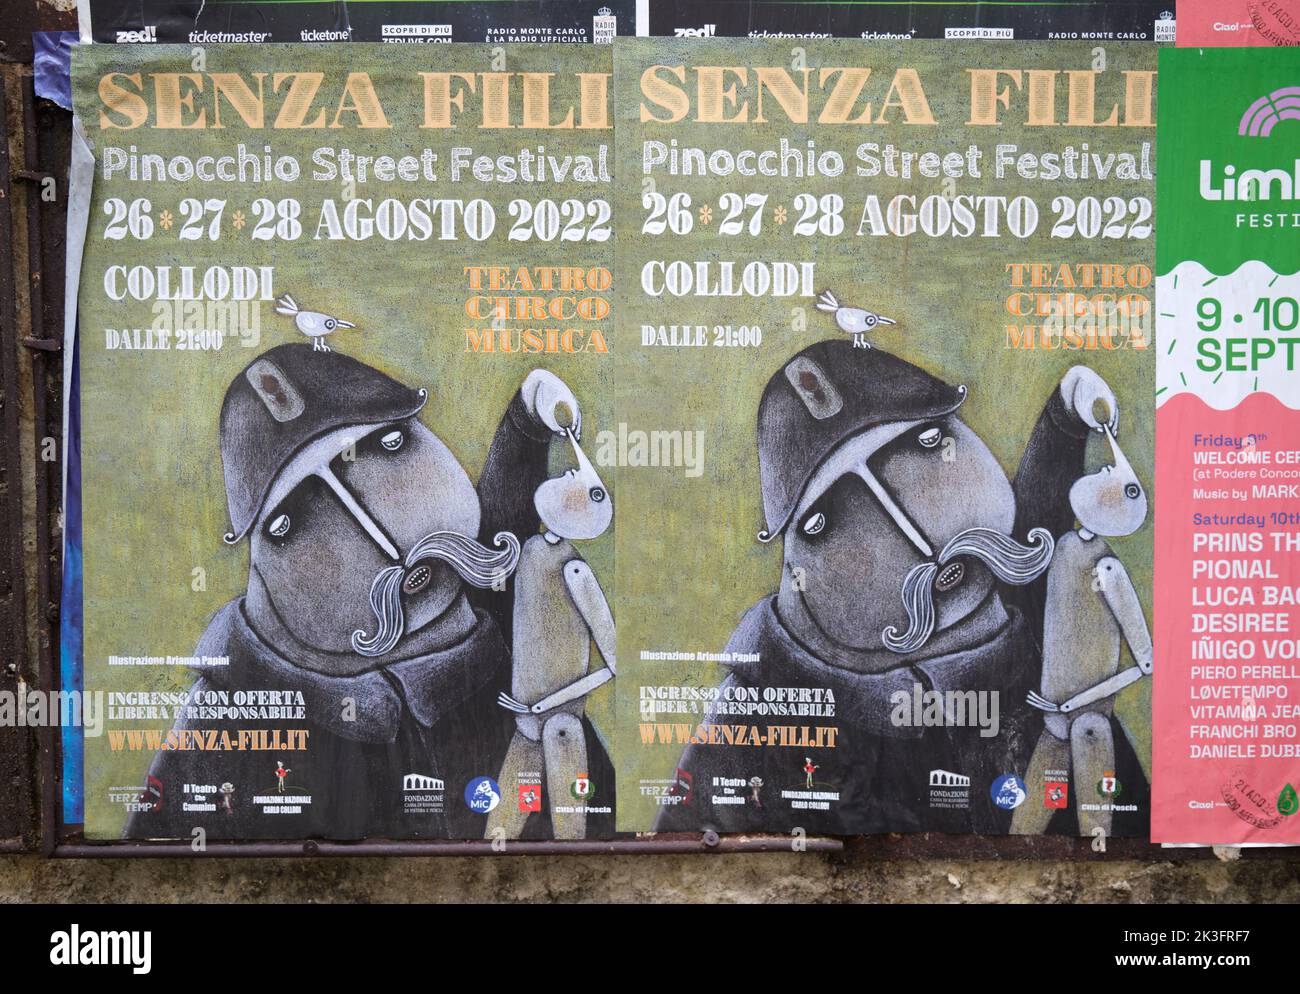 Pinochio Street Festival Poster Bologna Italy Stock Photo